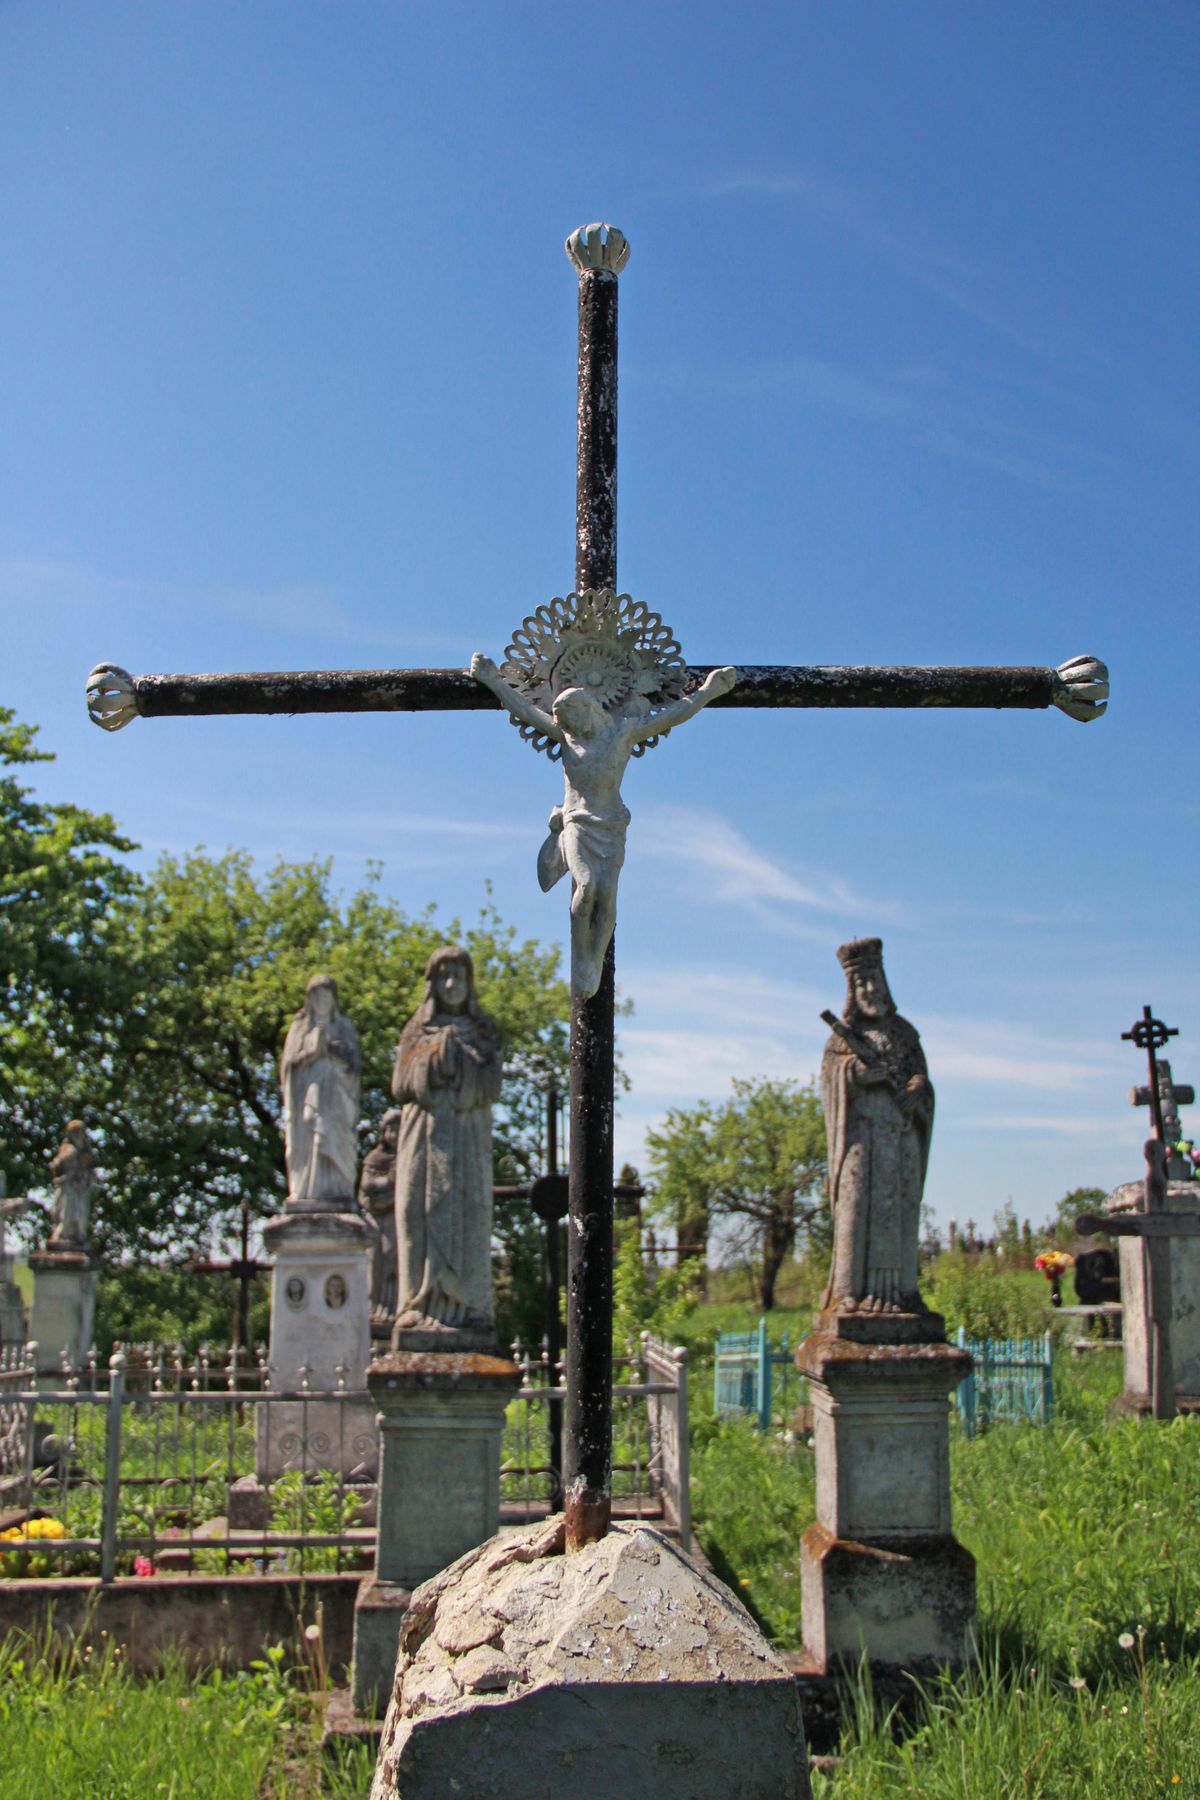 Cross from the gravestone of Wladyslaw Piotrowski, cemetery in Ihrownica